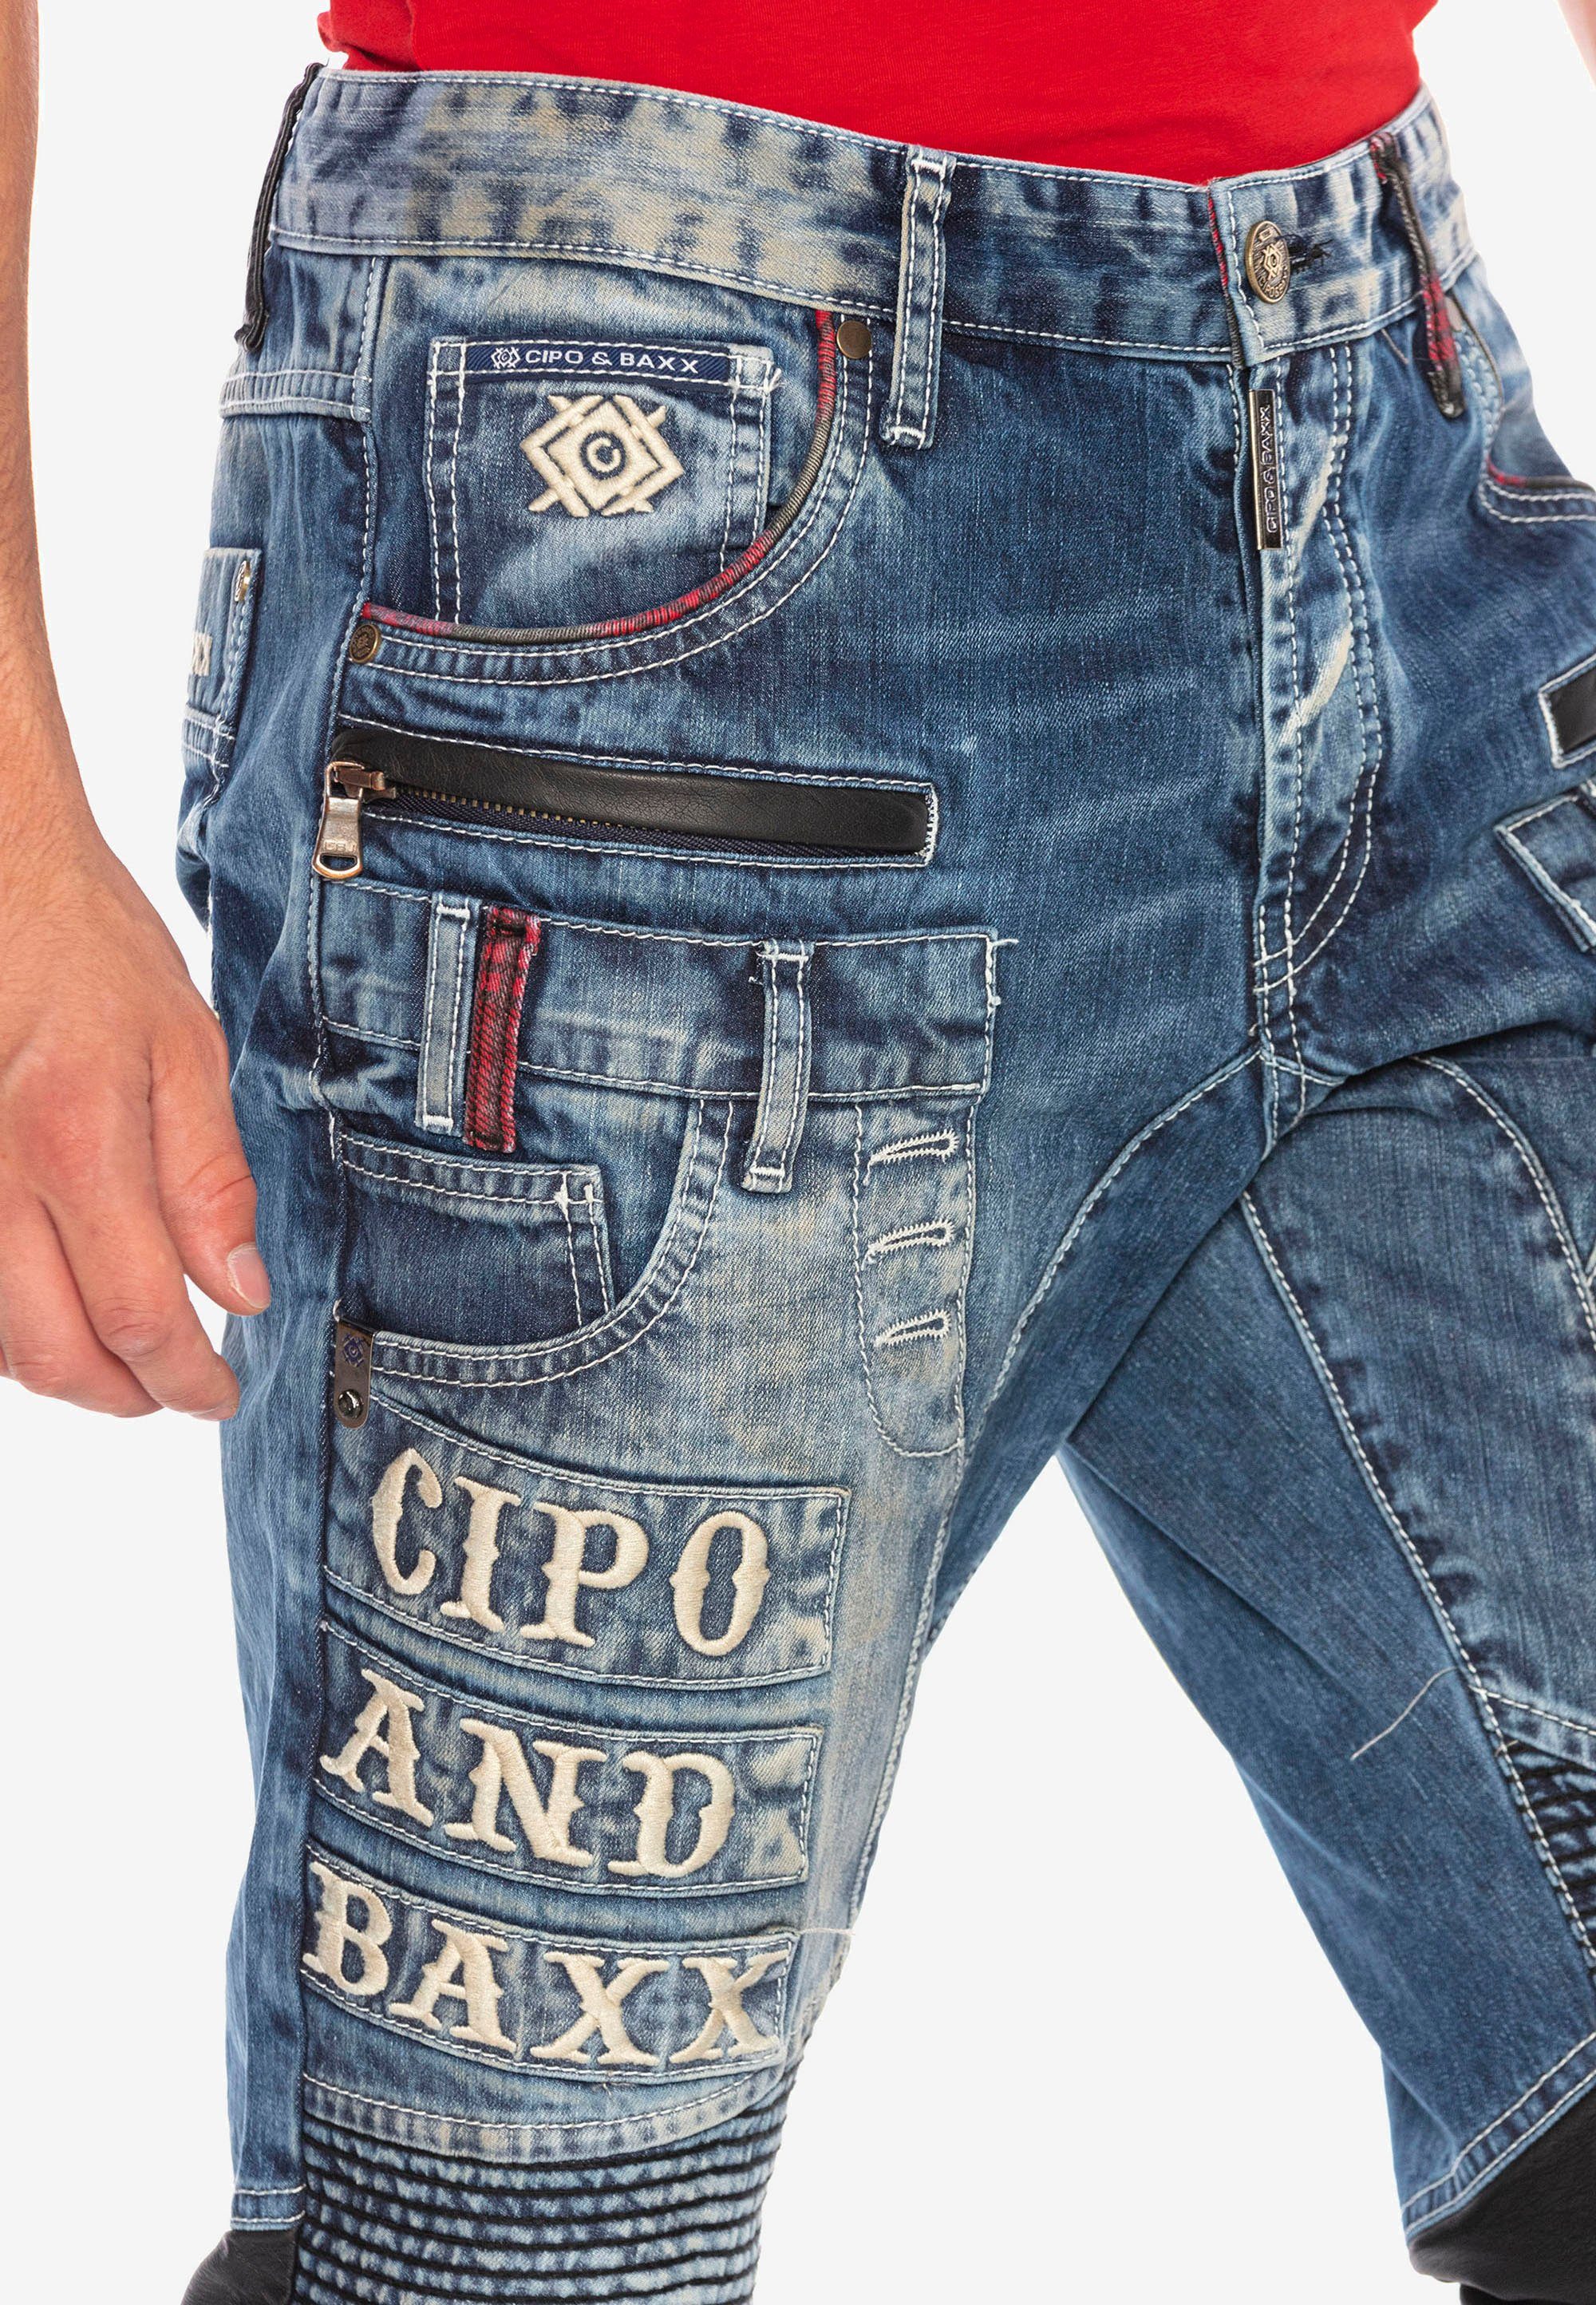 Cipo & Look im Baxx coolen CD637 Bequeme Jeans